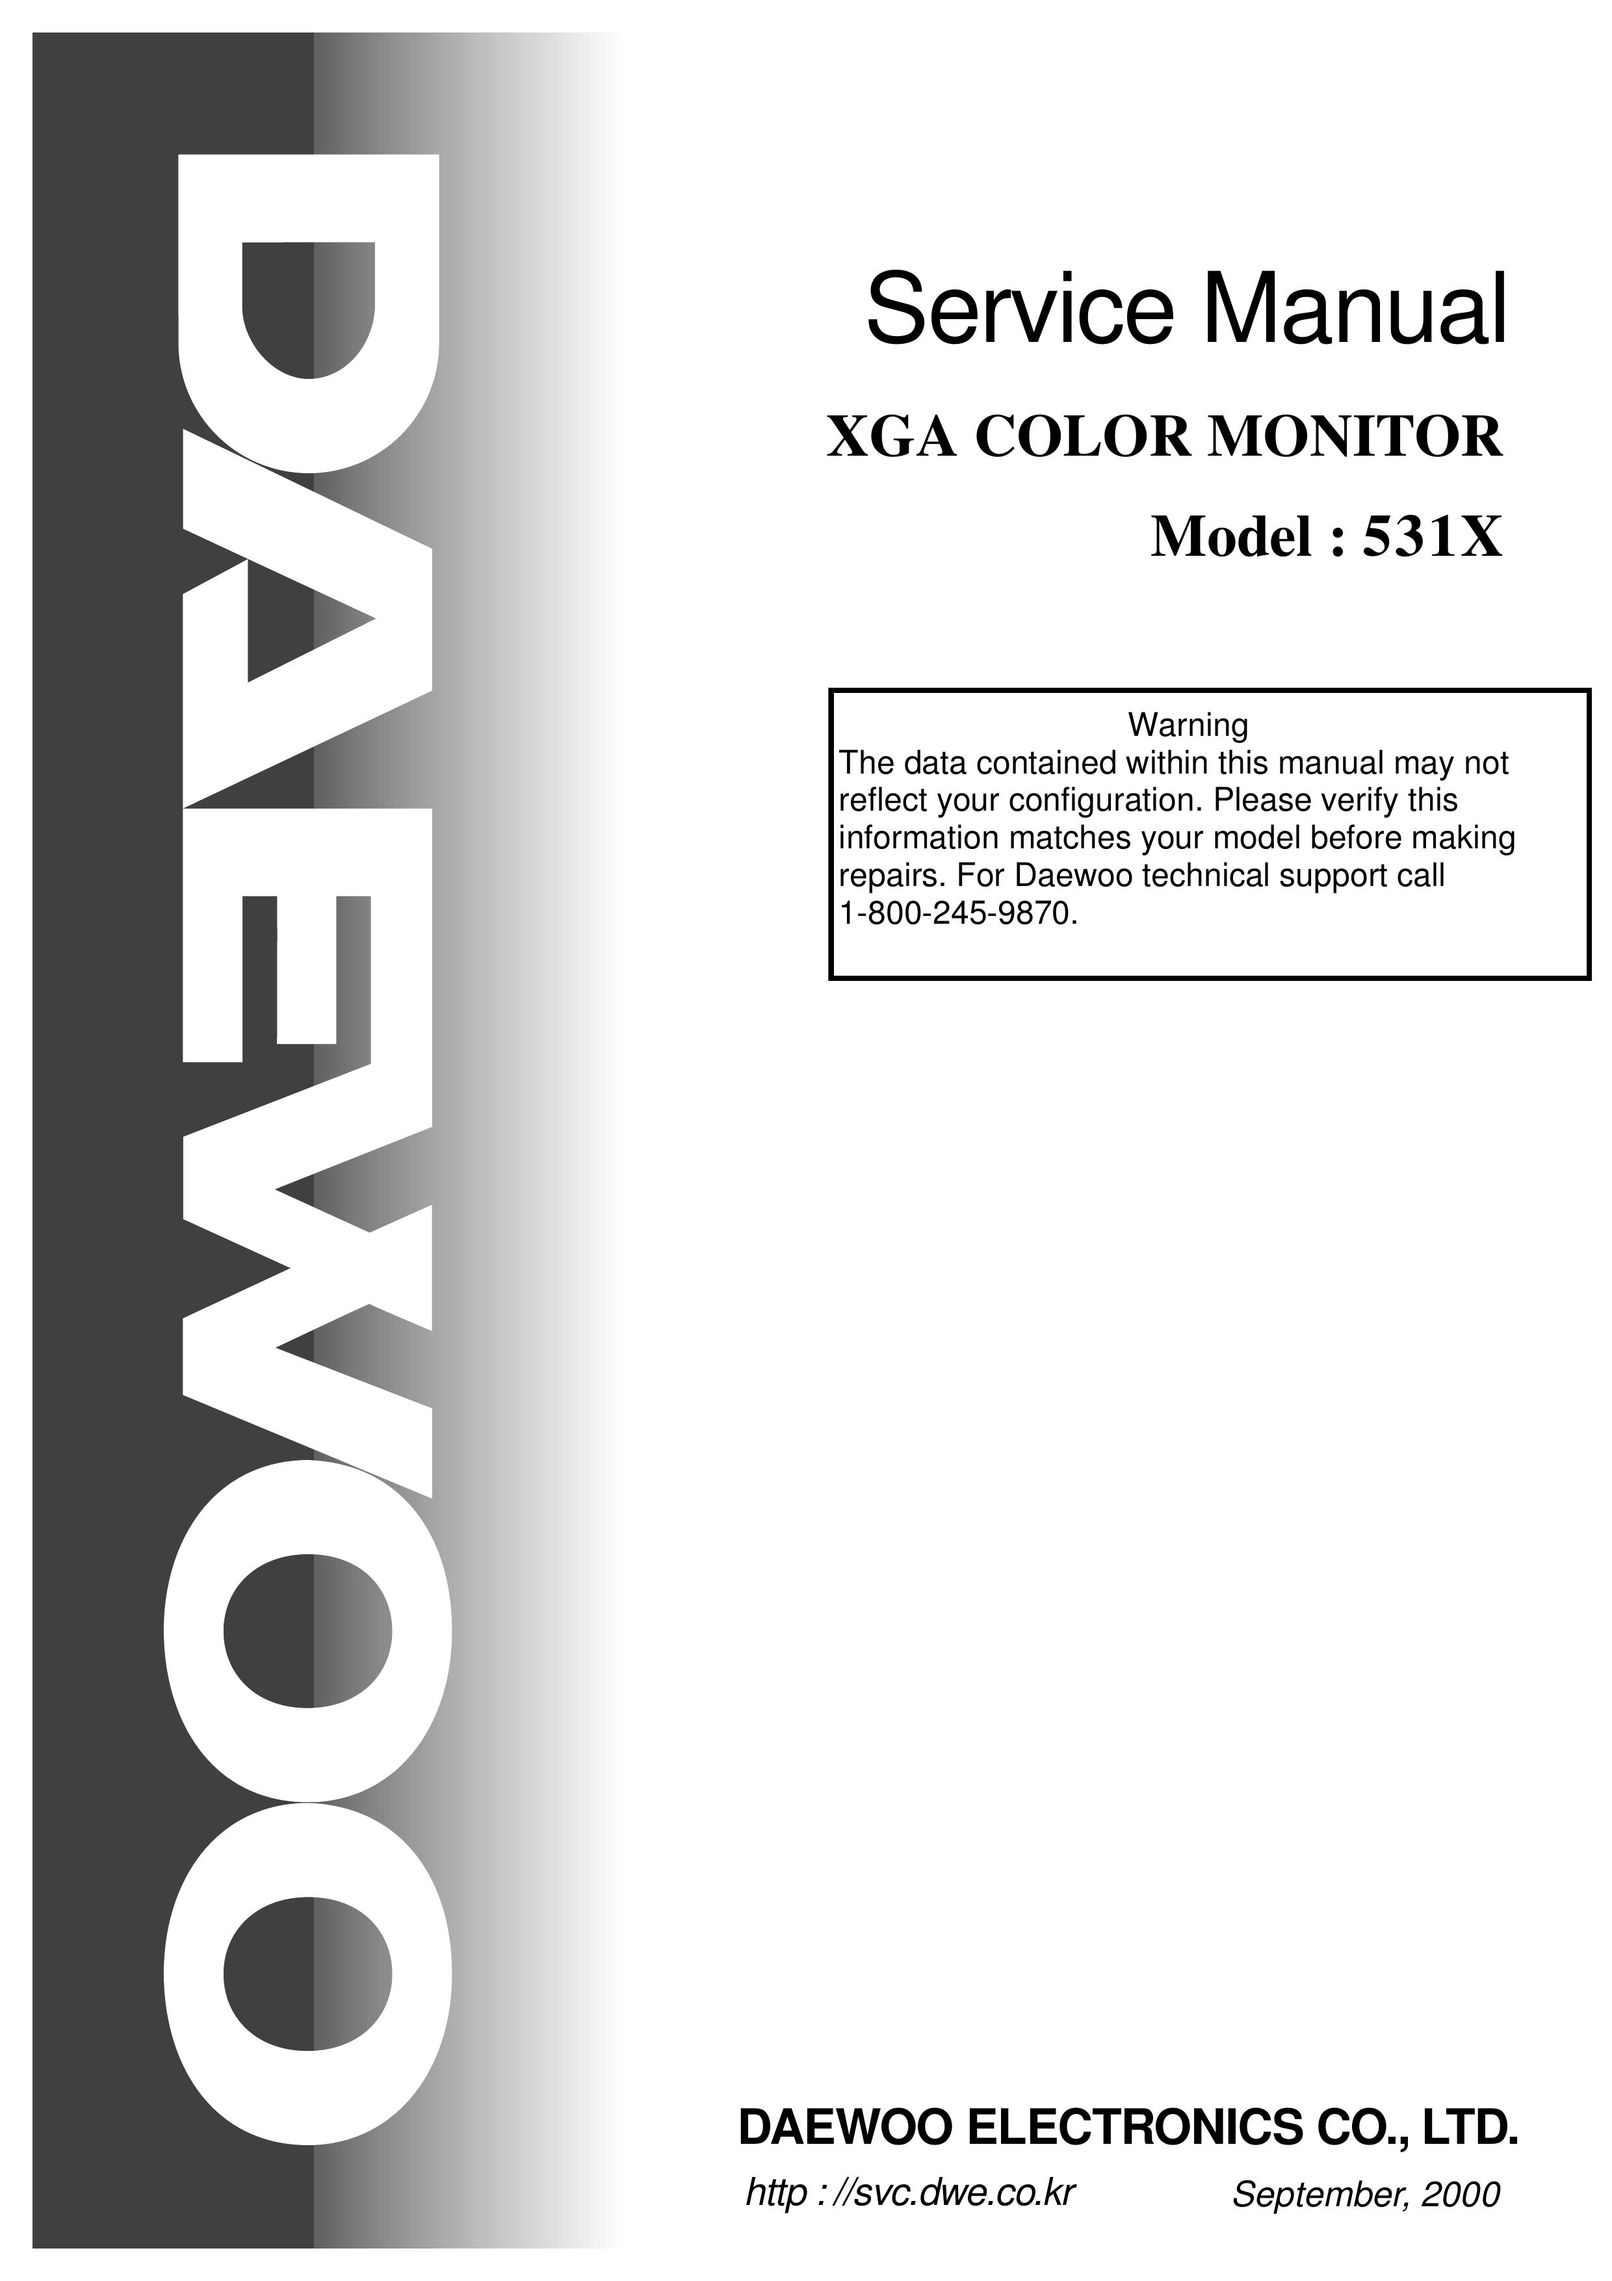 Daewoo 531X Computer Monitor User Manual